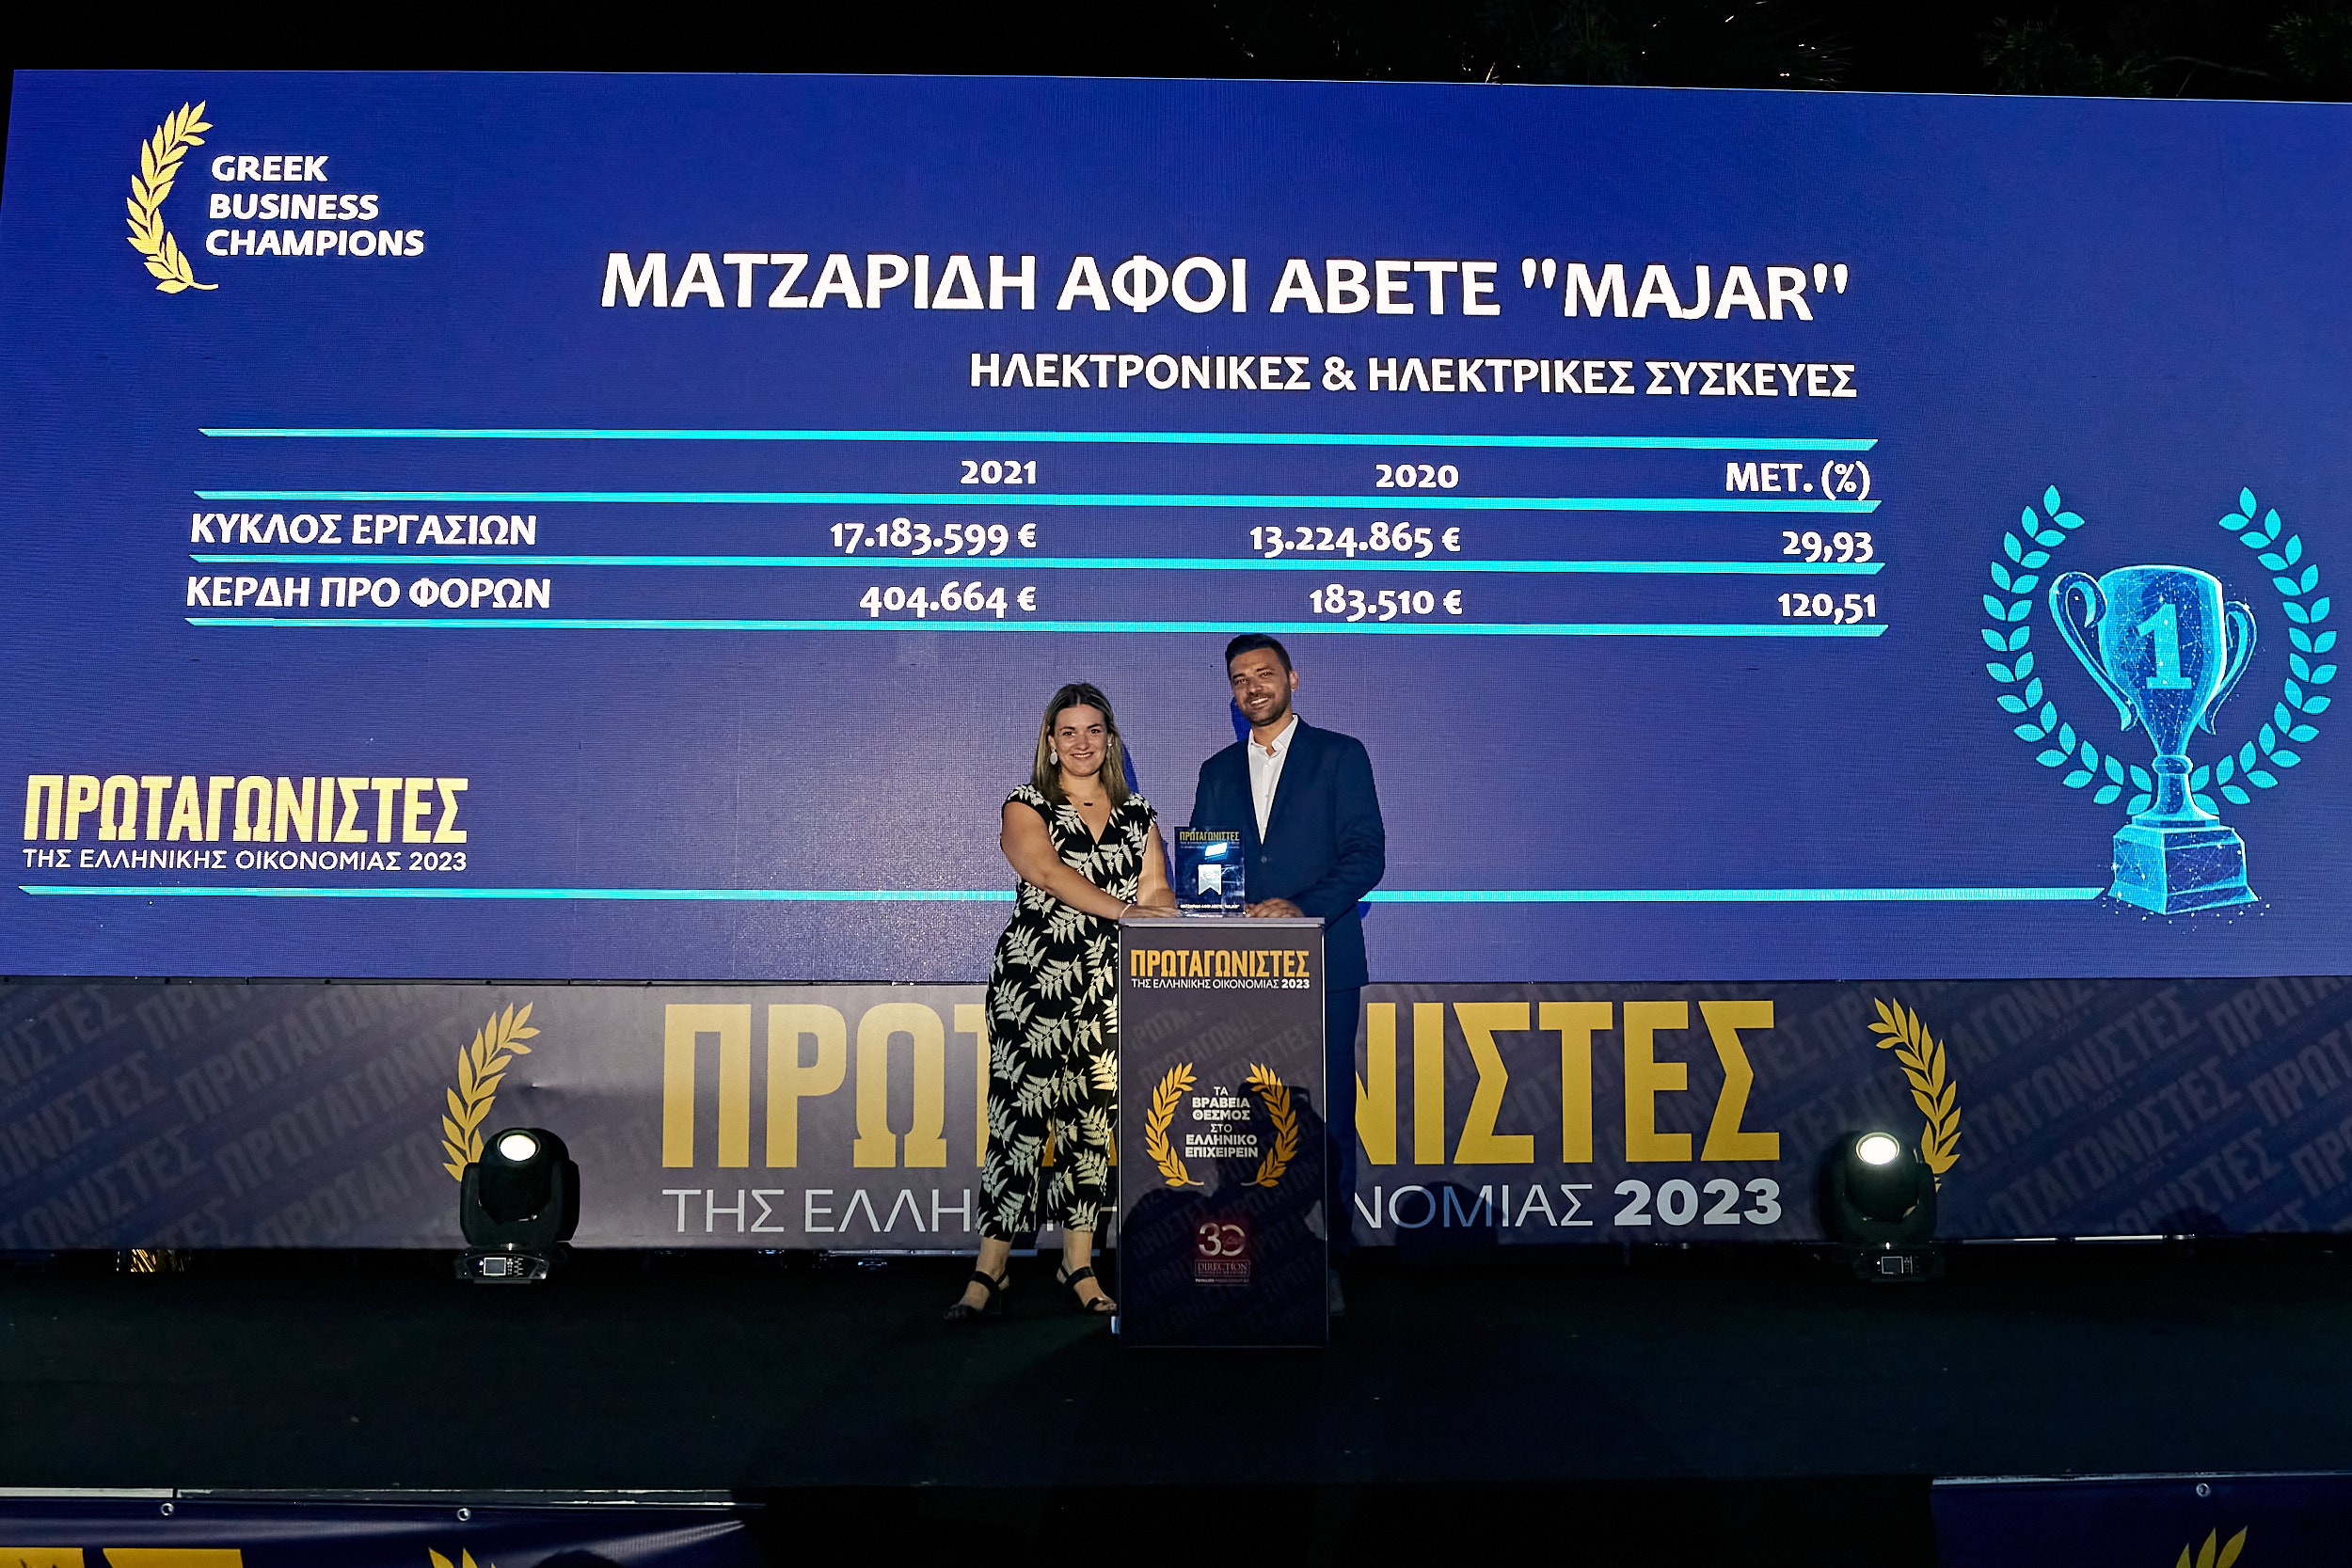 MAJAR SA: A Three-Time Consecutive Winner of the Prestigious "Greek Business Champion 2023" Award